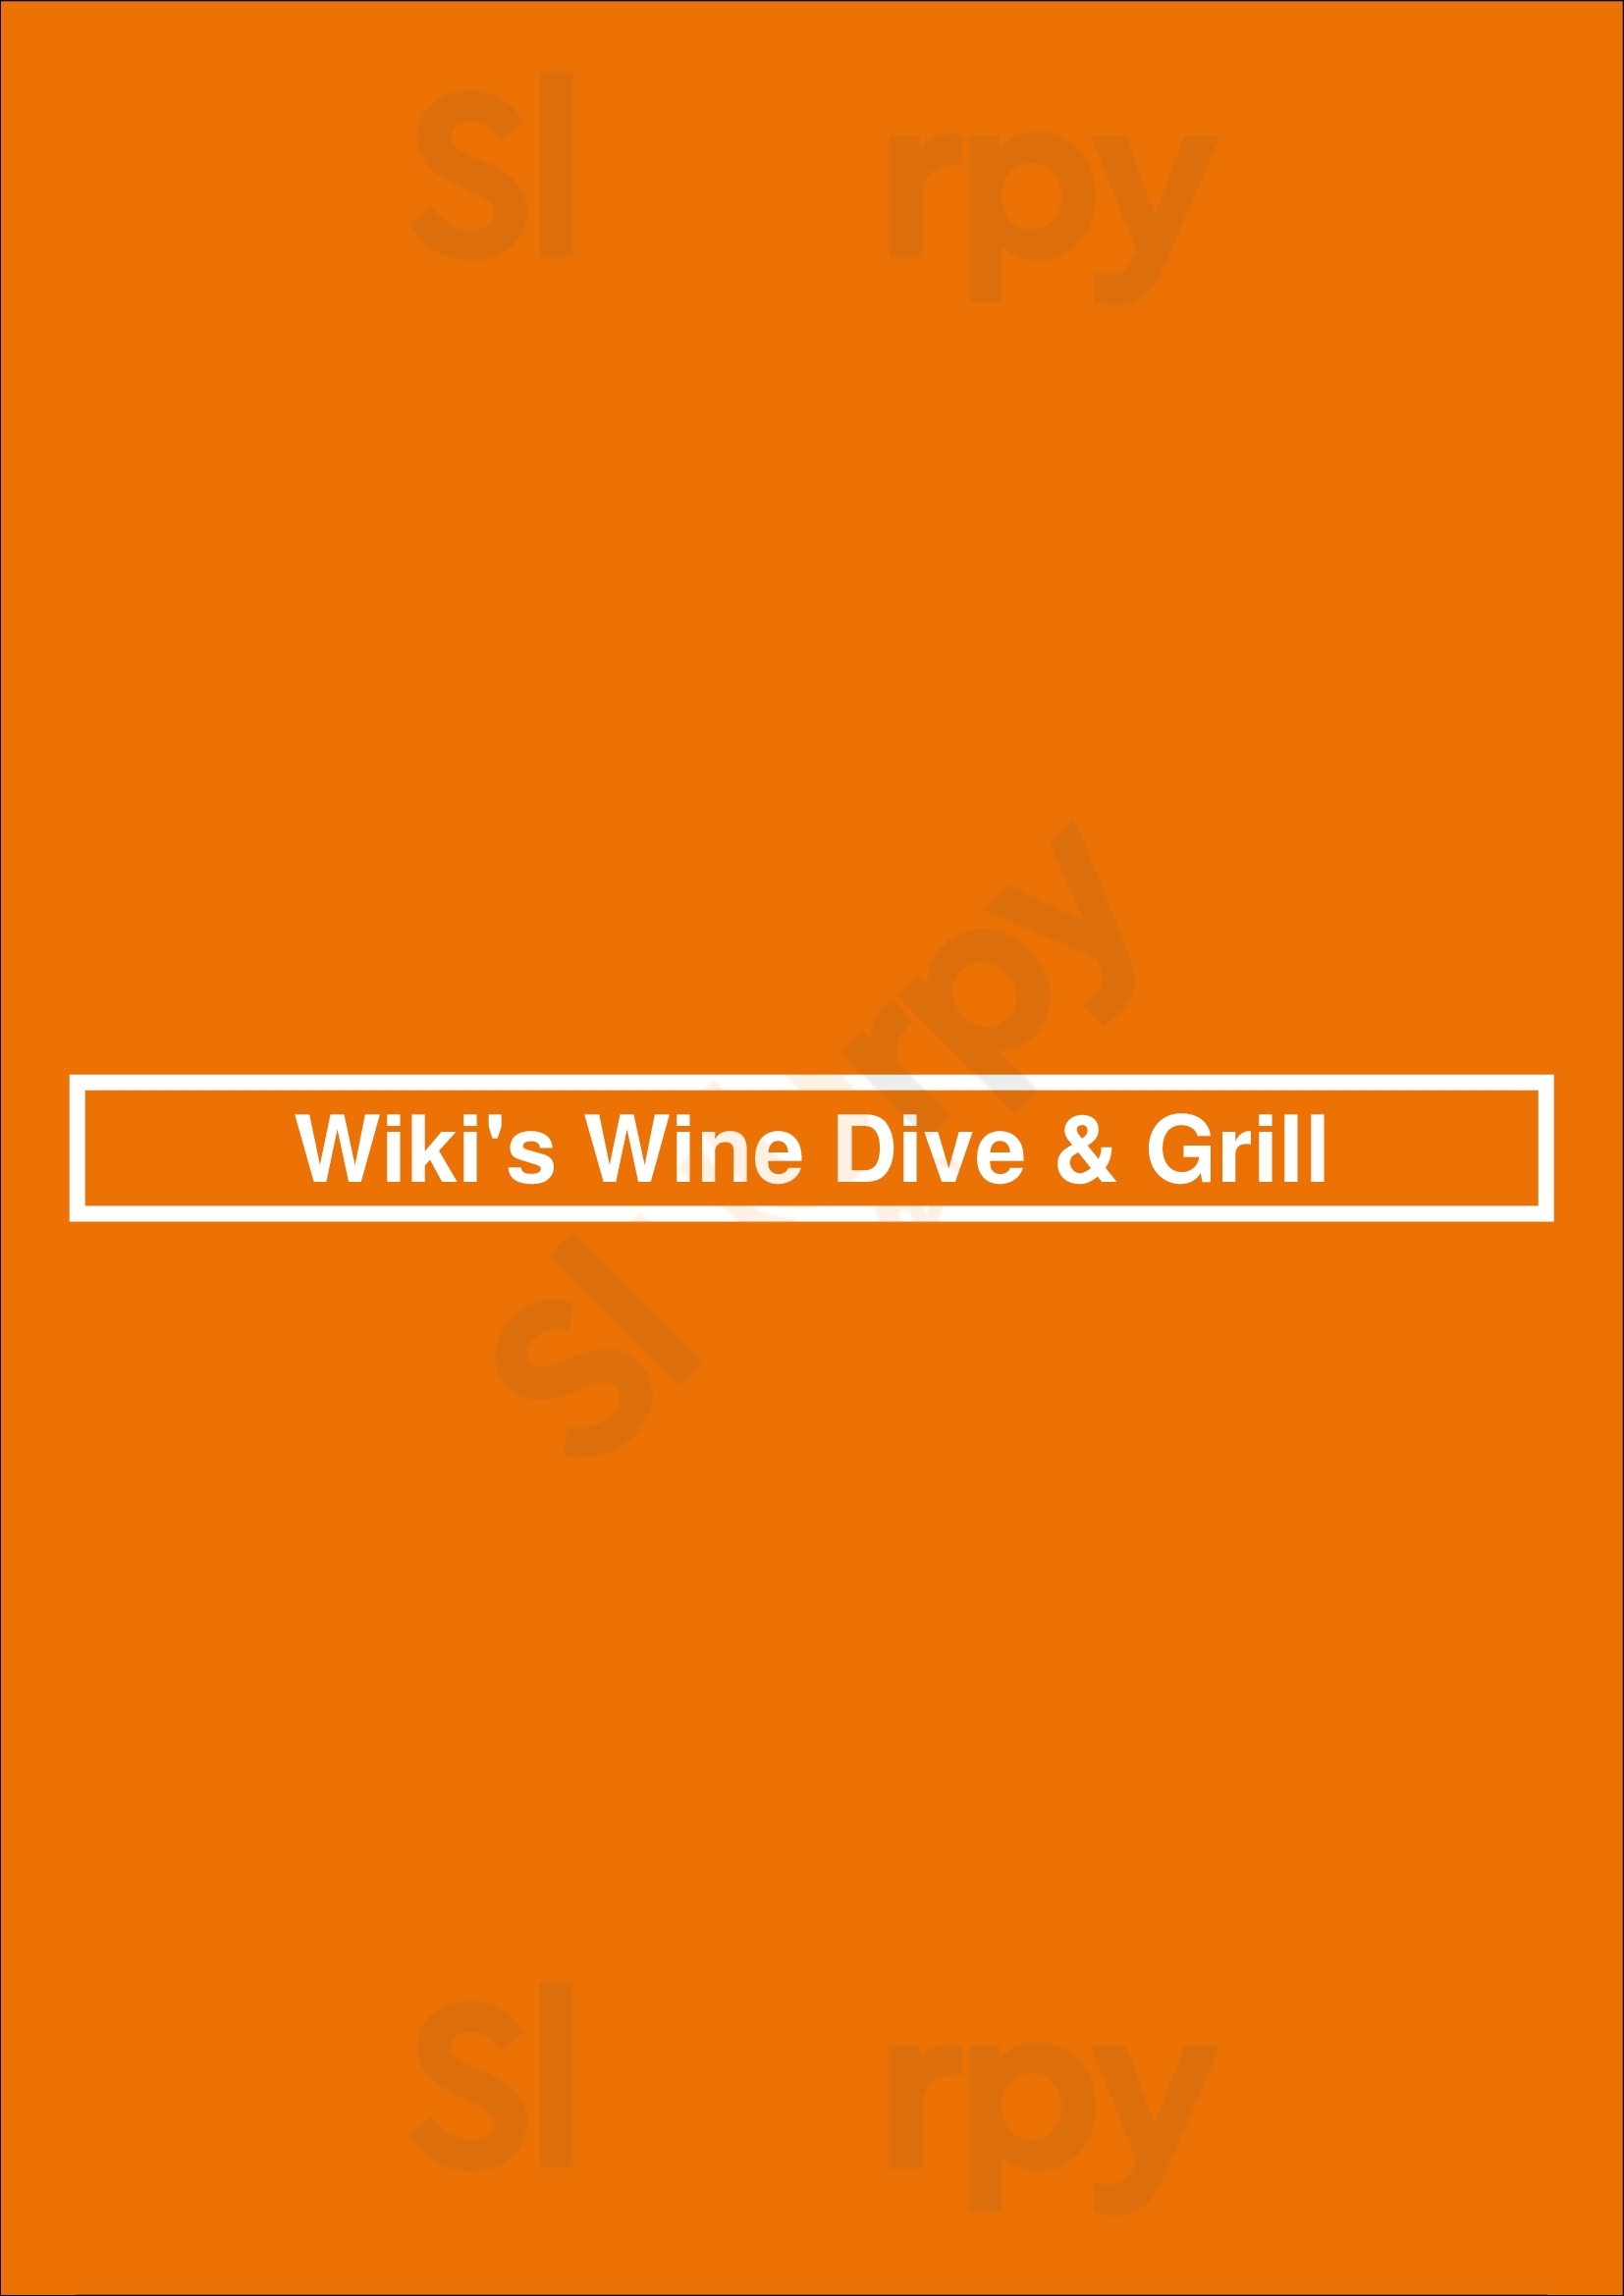 Wiki's Wine Dive & Grill Bakersfield Menu - 1